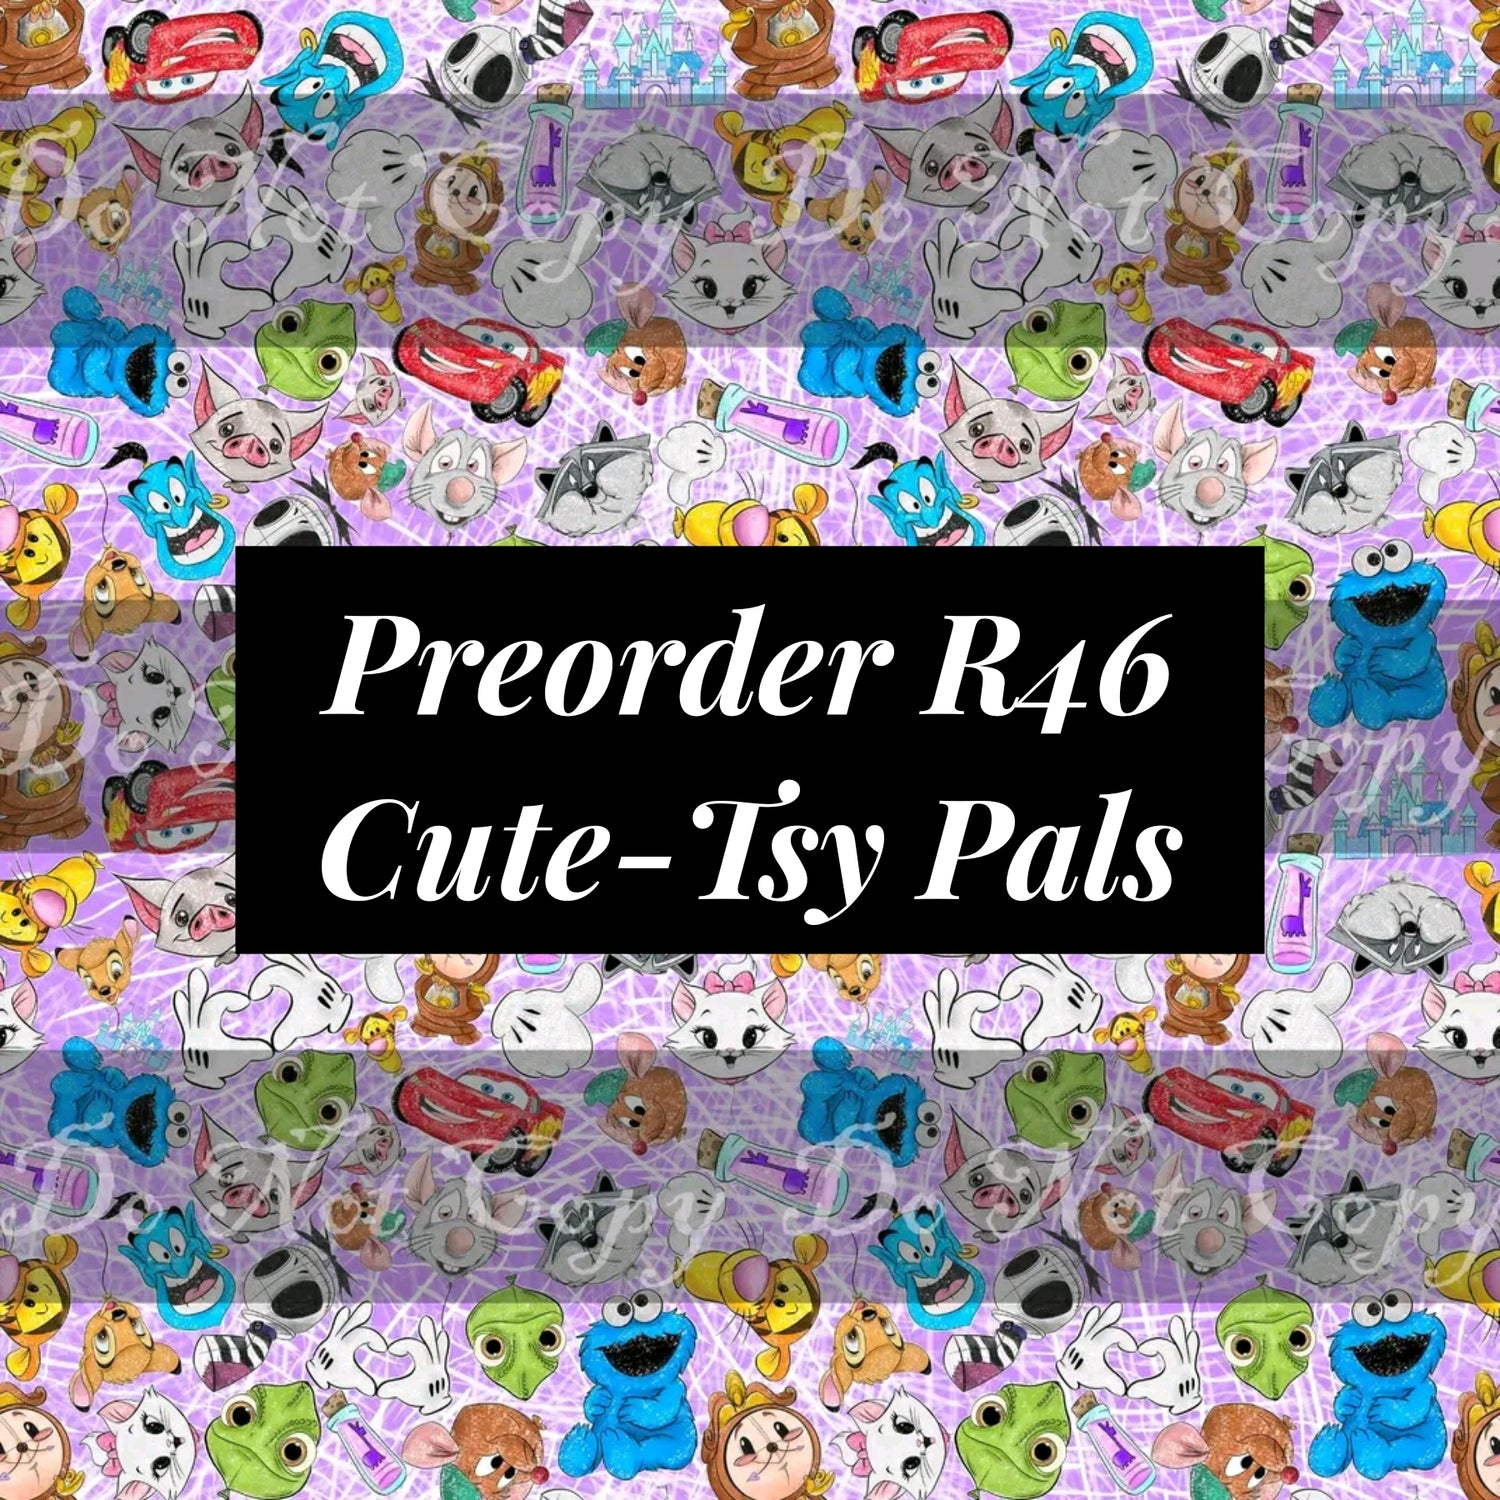 Preorder R46 Cute- Tsy Pals